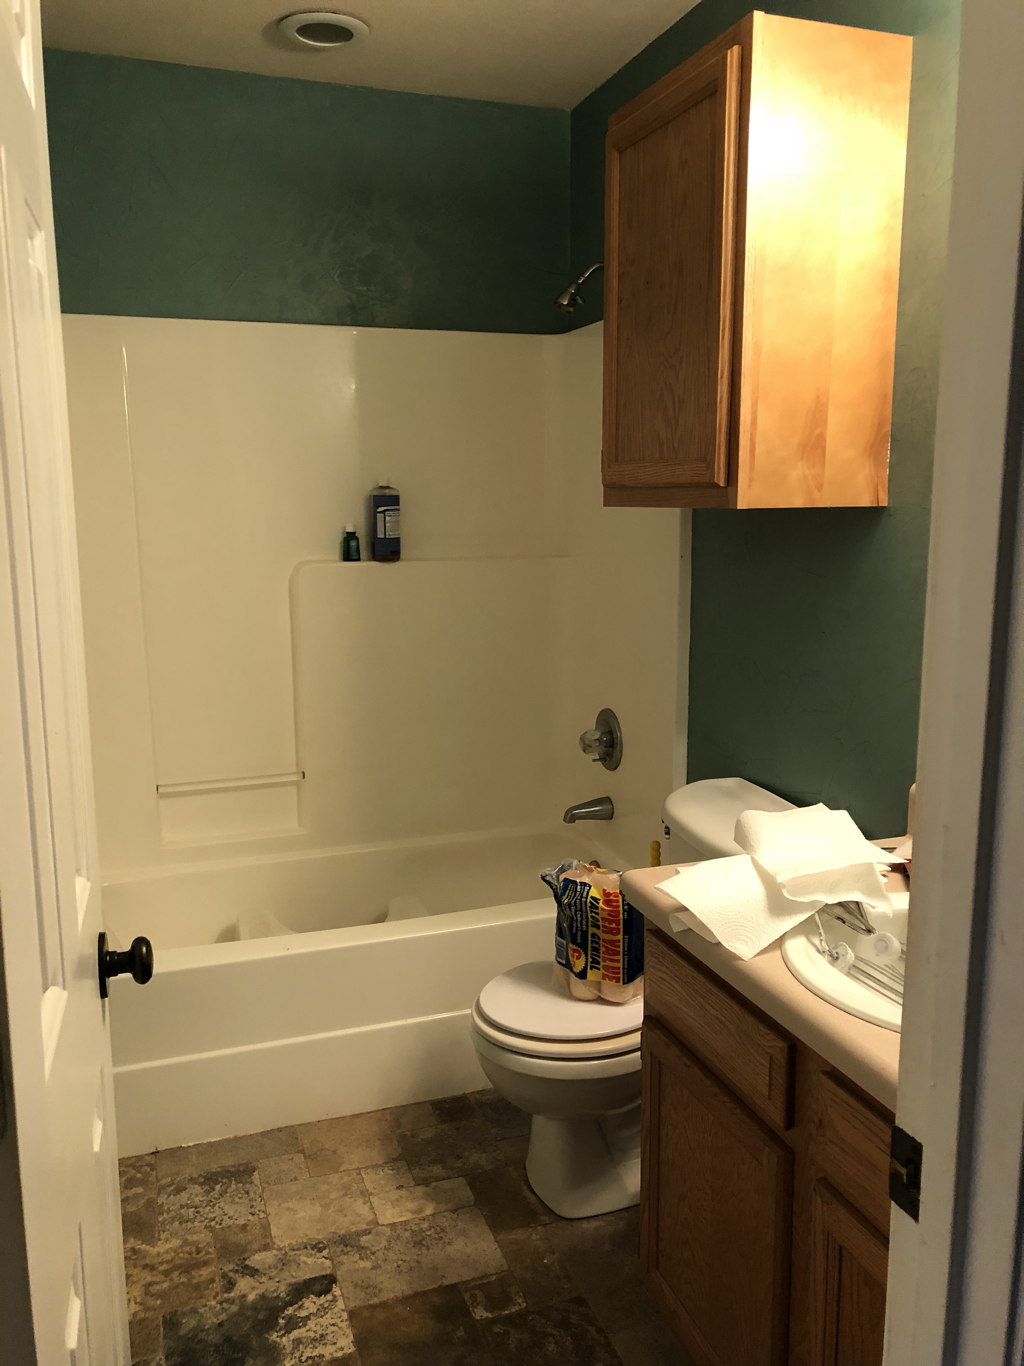 BEFORE a simple bathroom renovation.